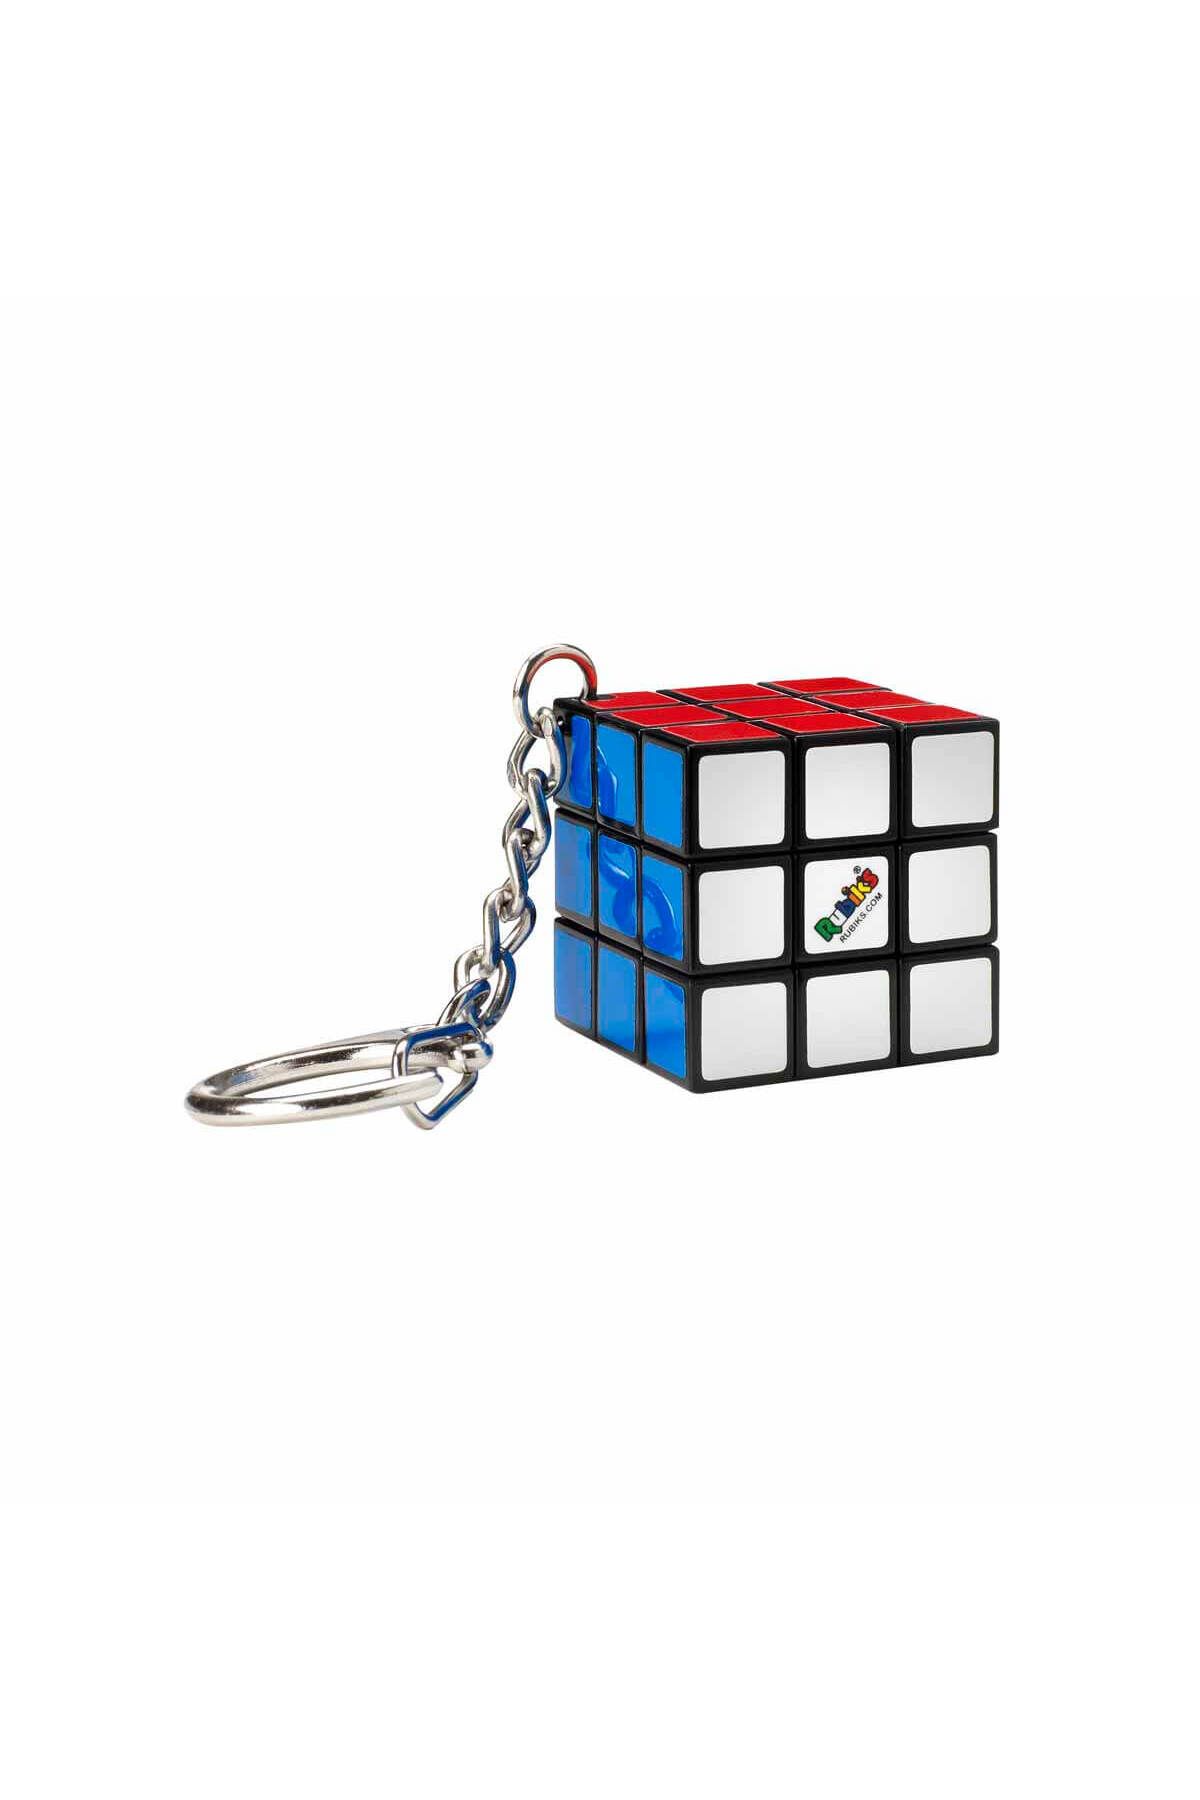 Rubiks Rubik's Anahtarlıklı Zeka Küpü